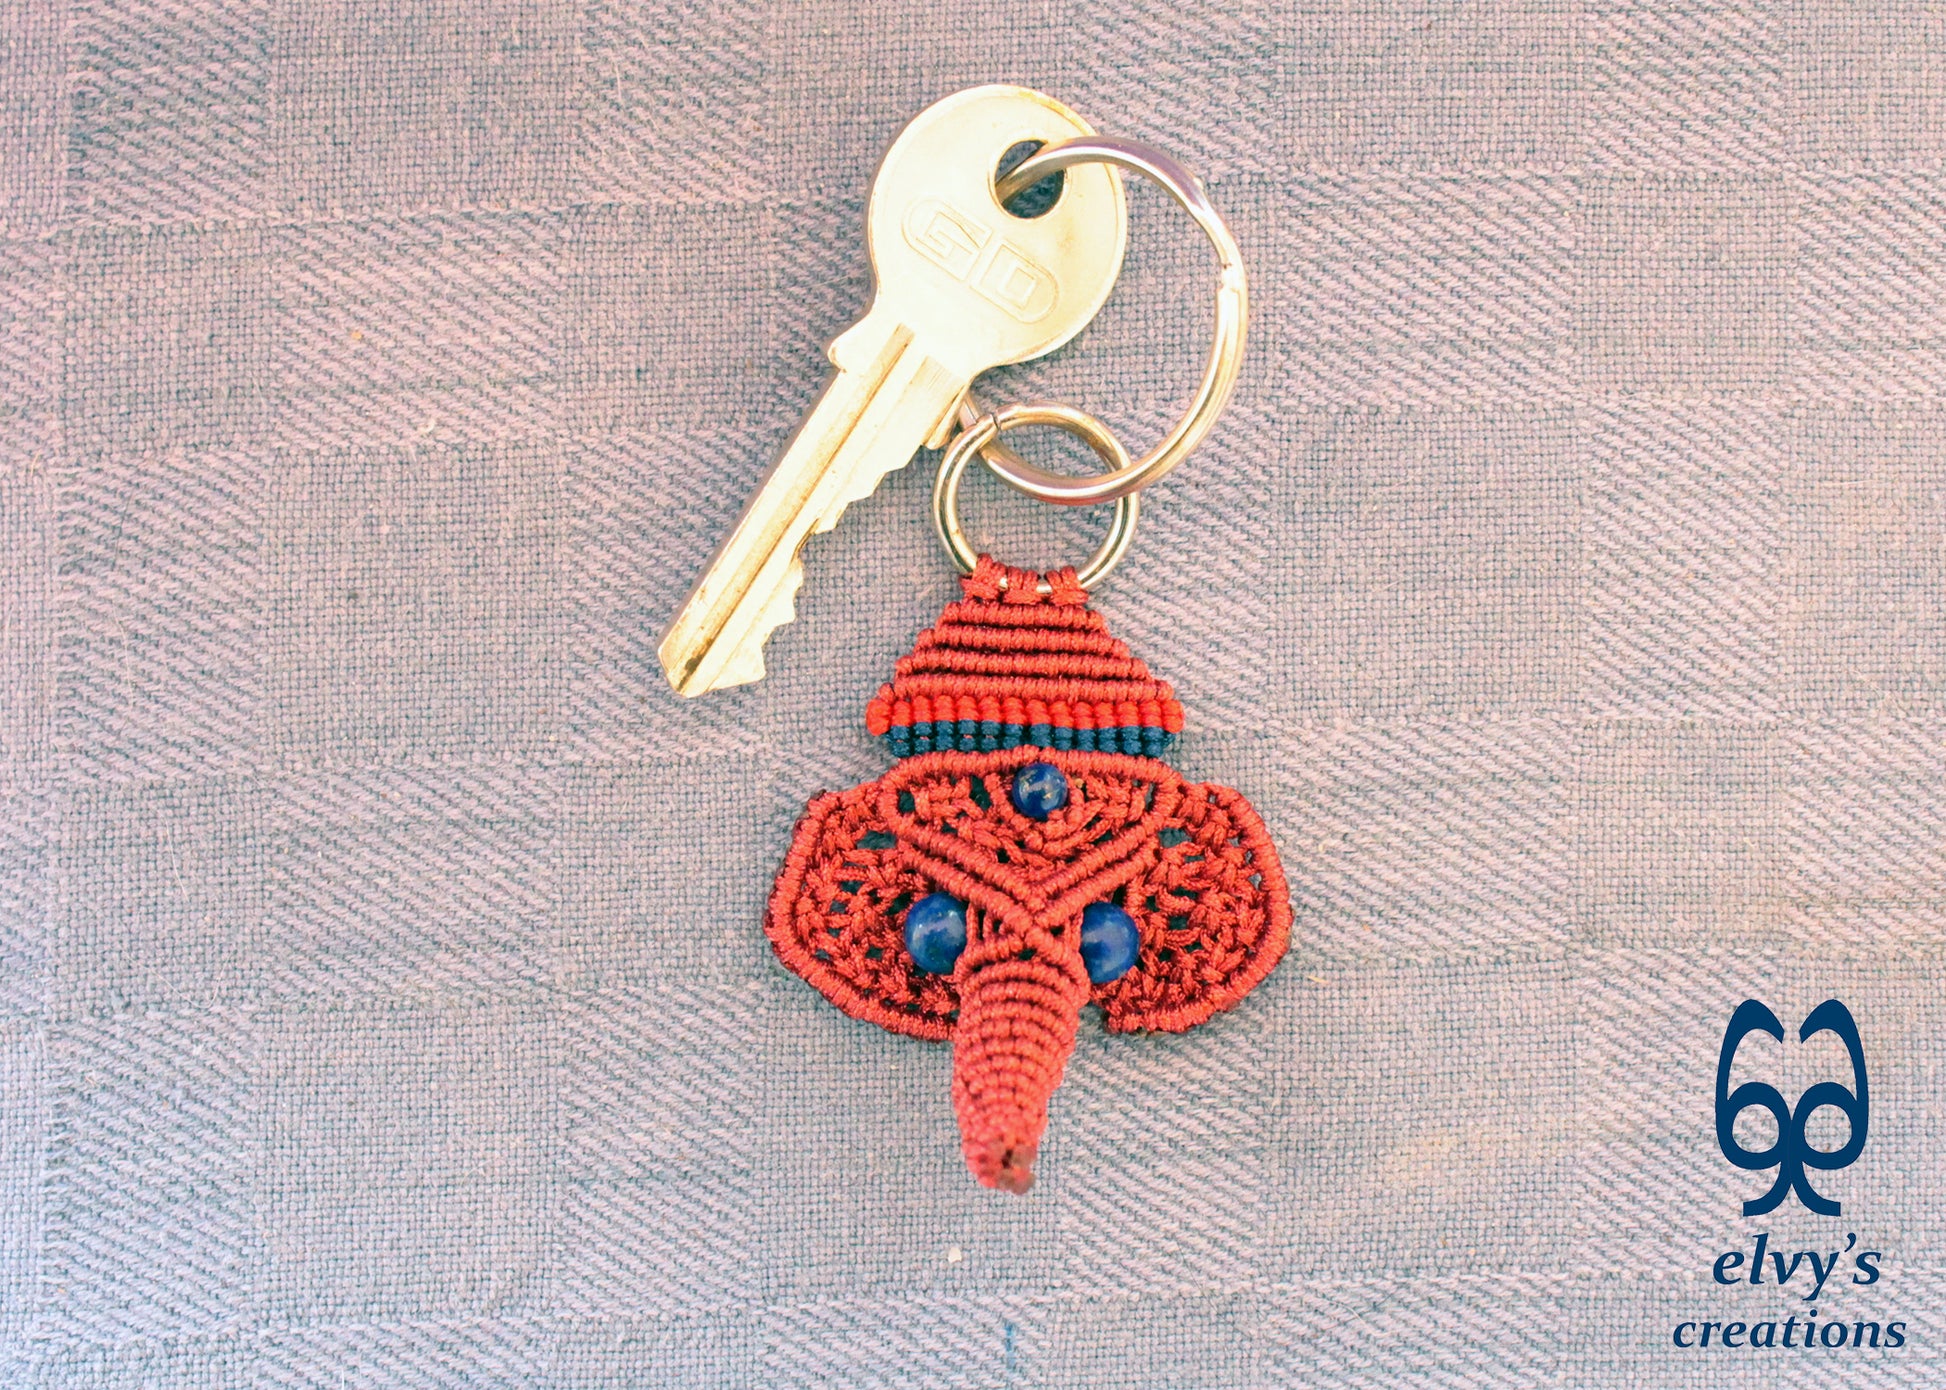 Handmade Macrame Ganesha Key Chain, Elephant Key Chain, Housewarming Gift, Small Gift for Woman and Man